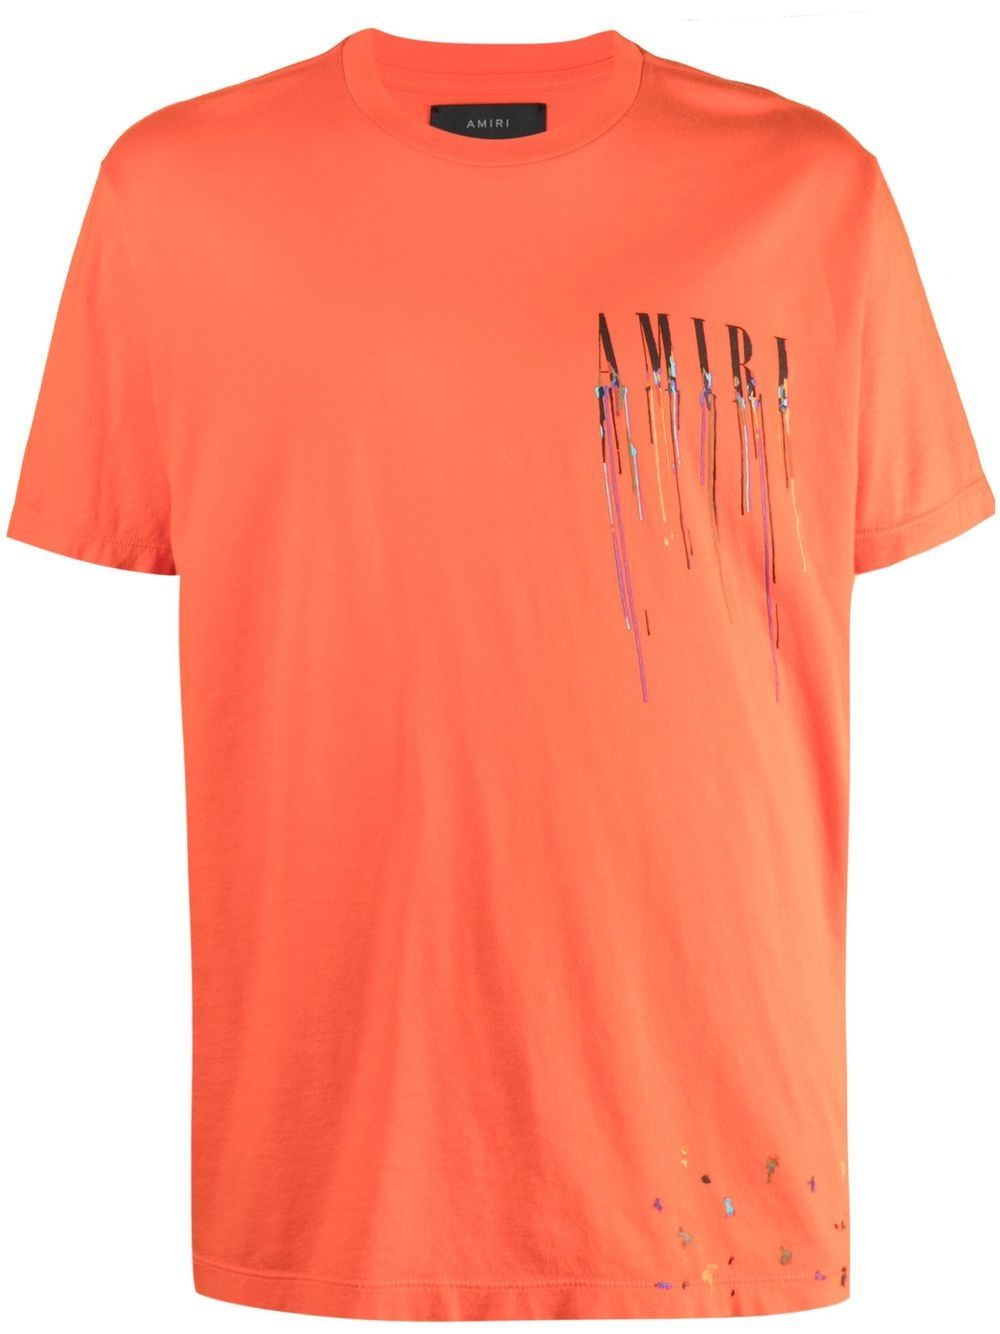 Amiri Greene Street Flagship Short Sleeve Tee Shirt Blue Orange Pre-Owned